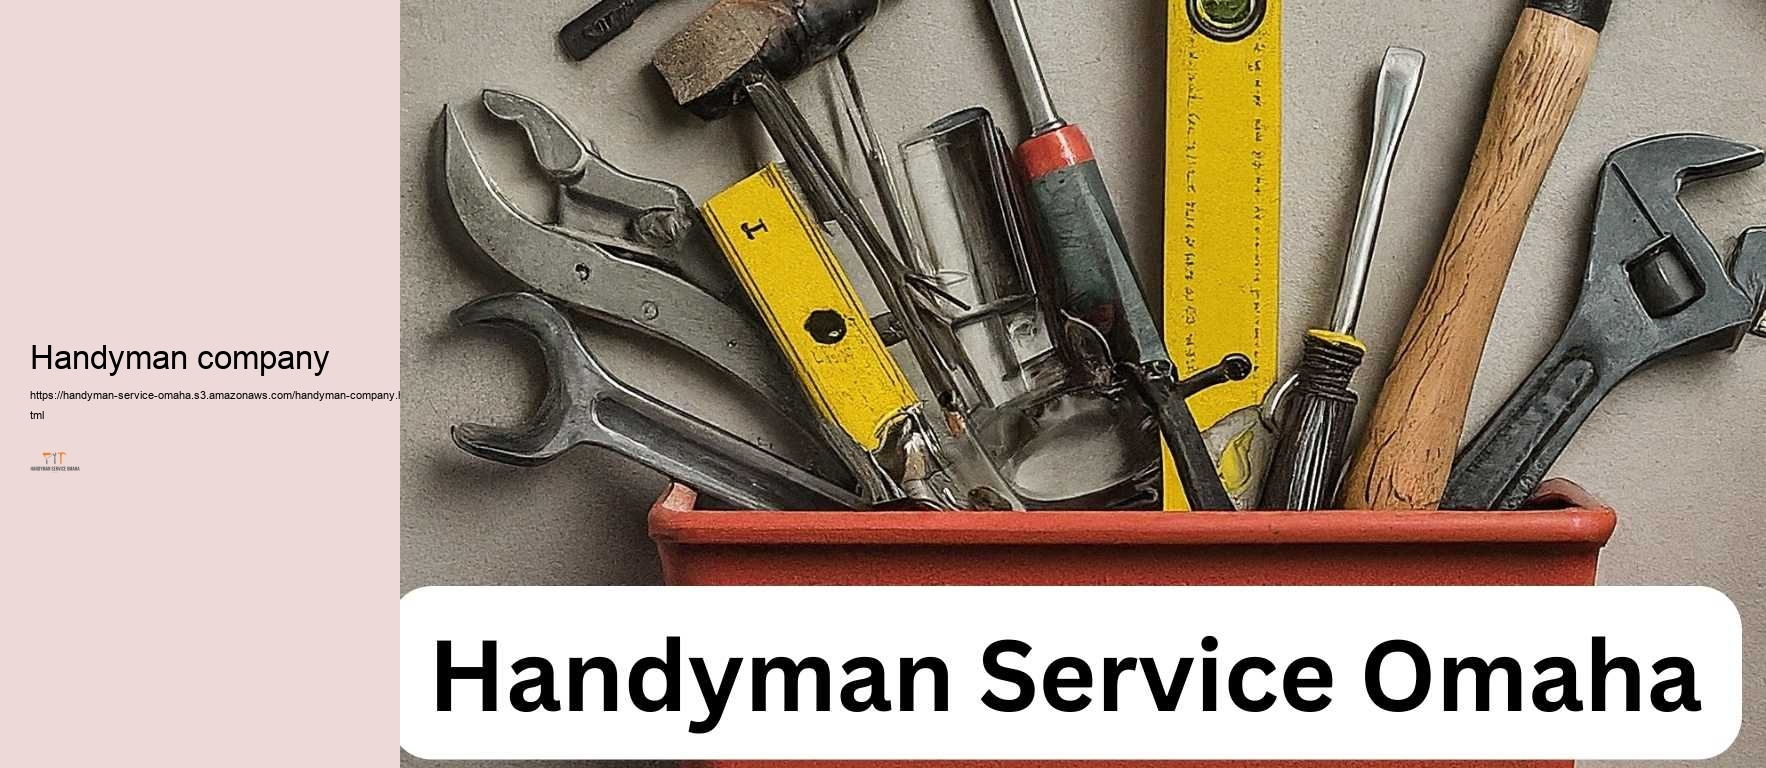 Handyman company